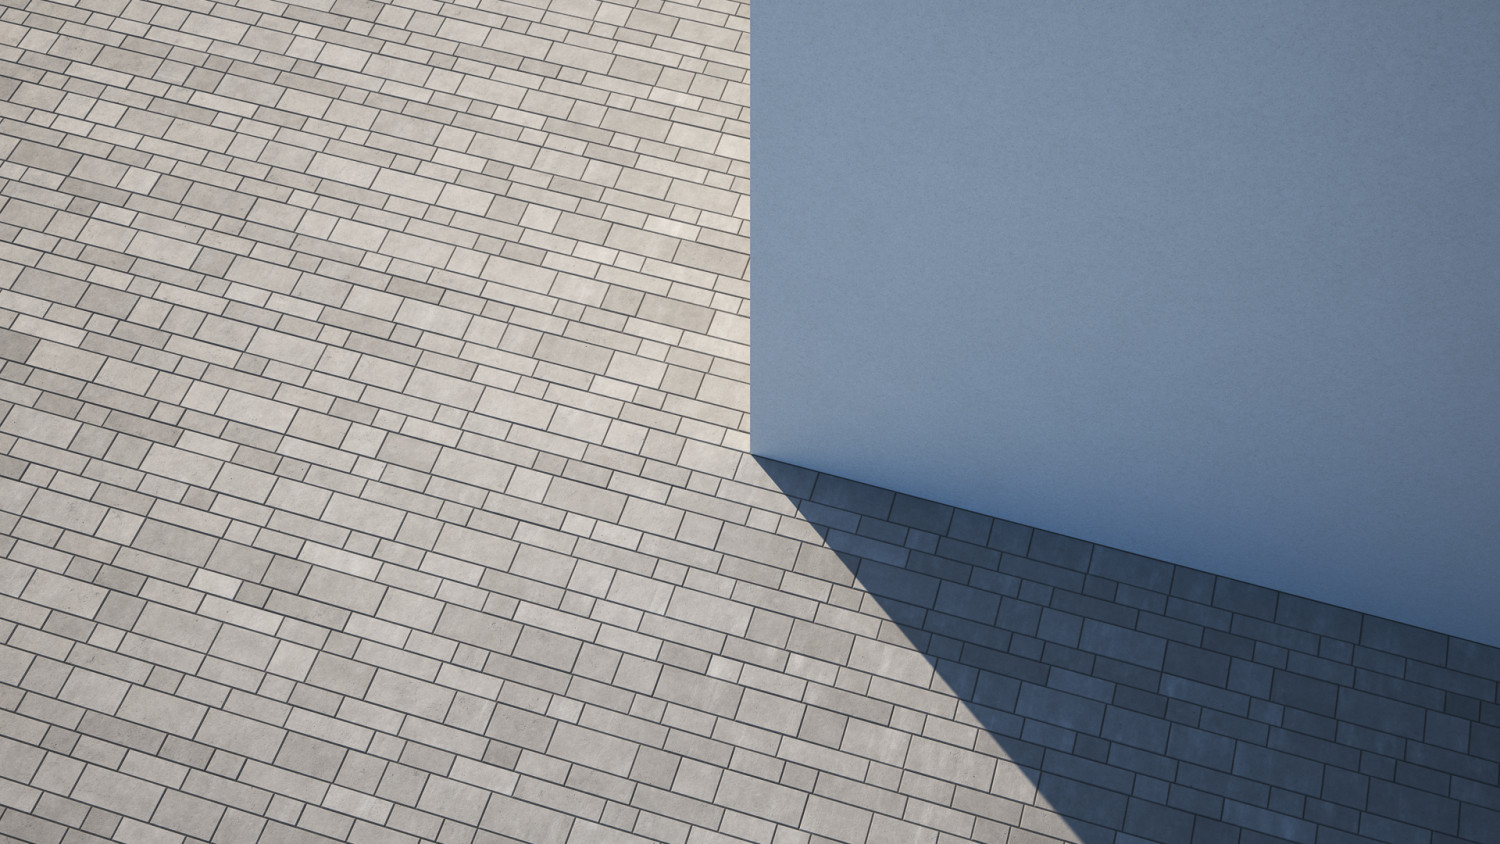 Concrete paving material